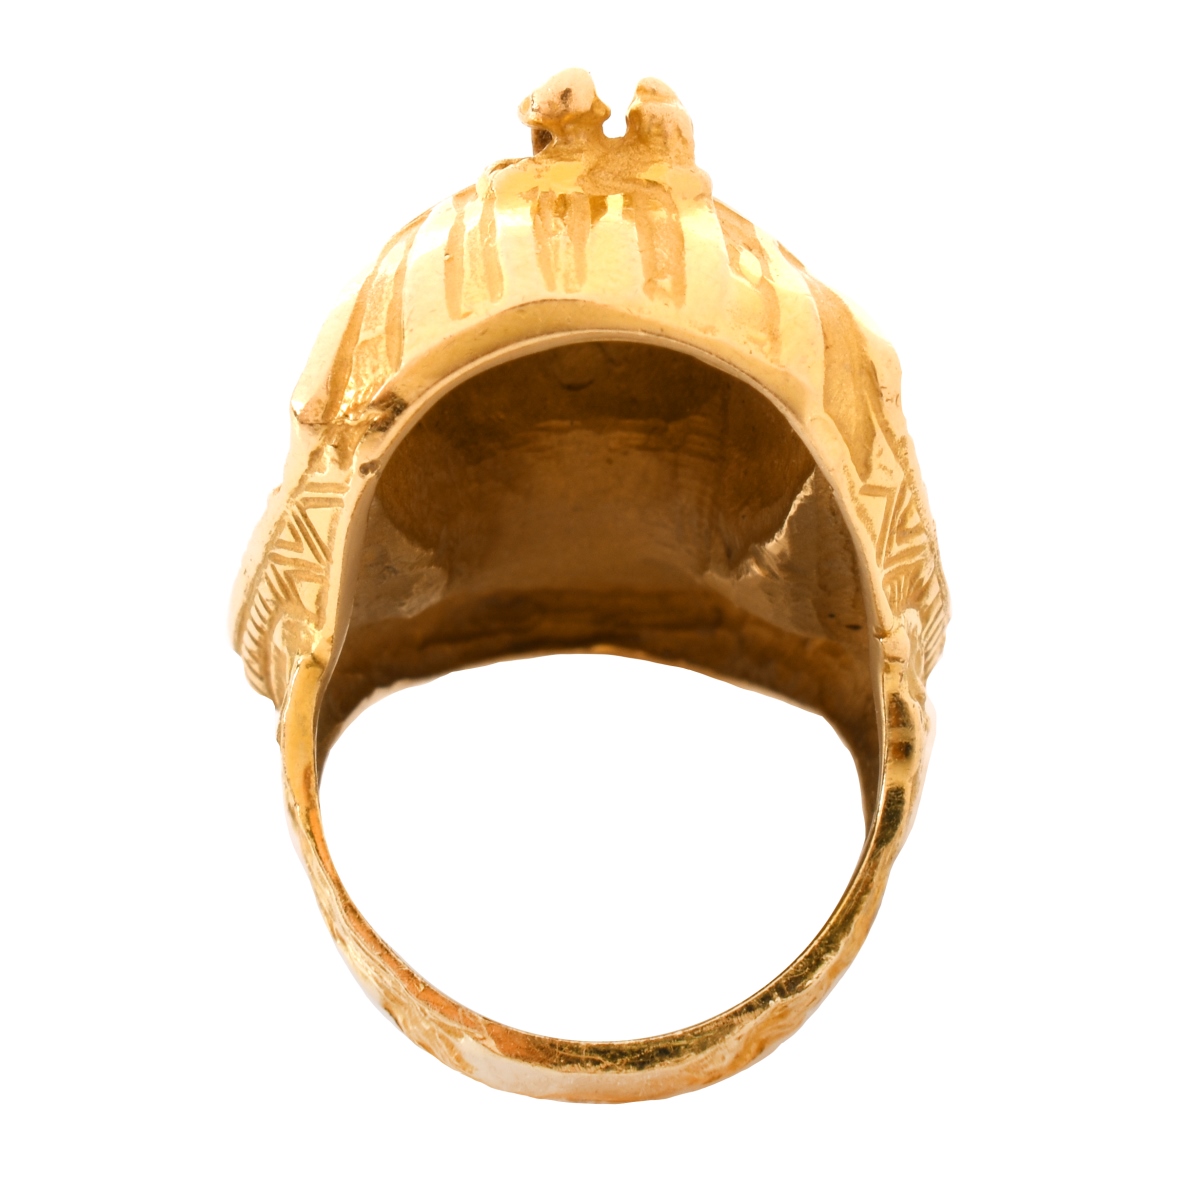 Vintage 14K Gold King Tut Ring